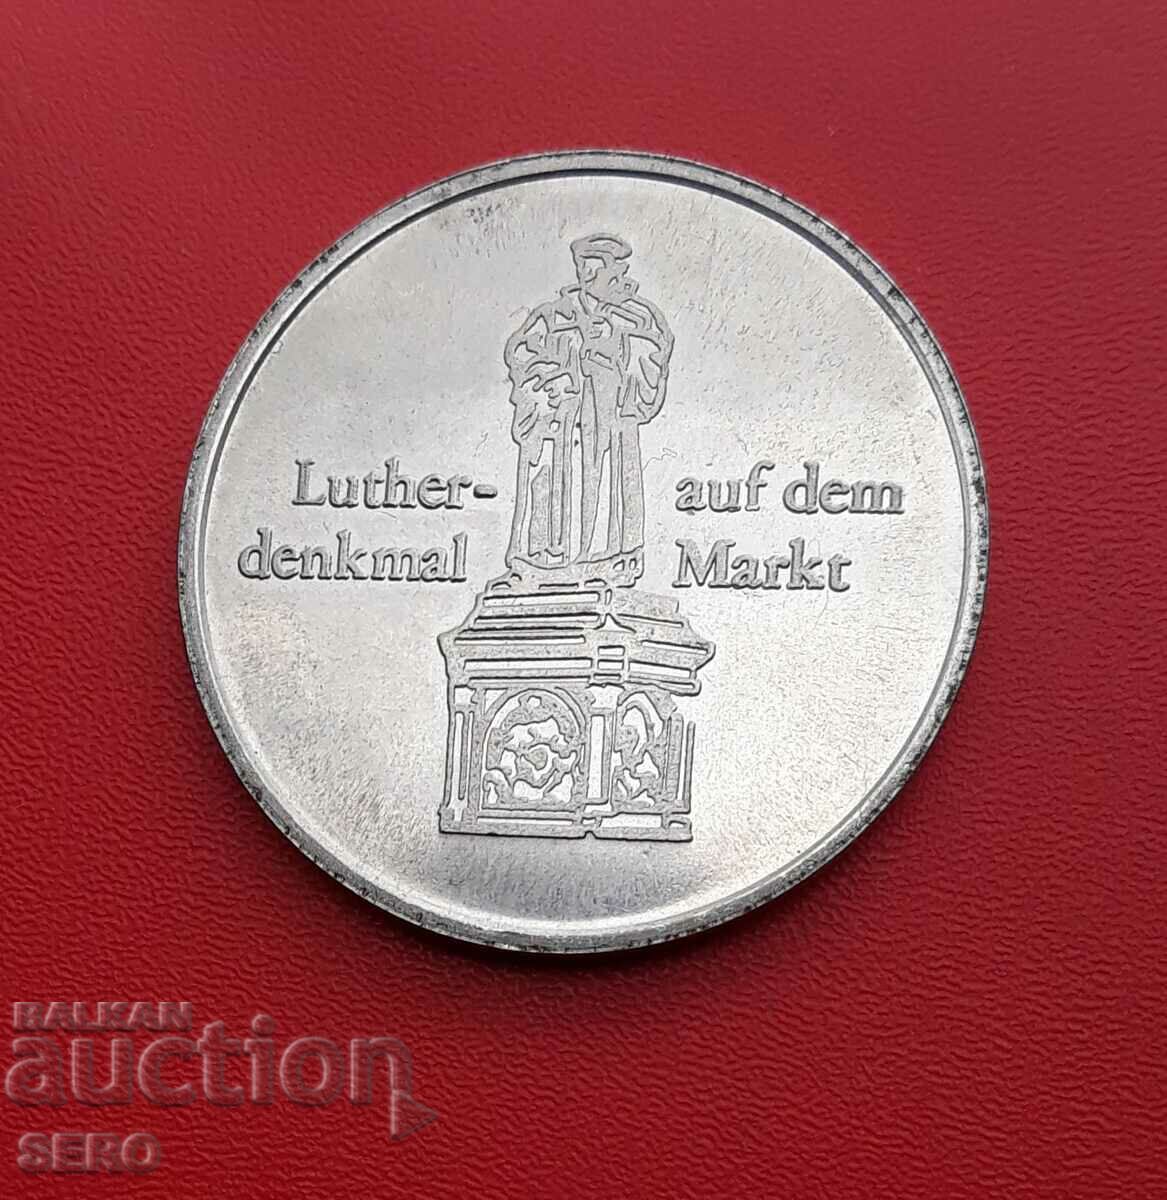 Germany-GDR-Medal-Martin Luther